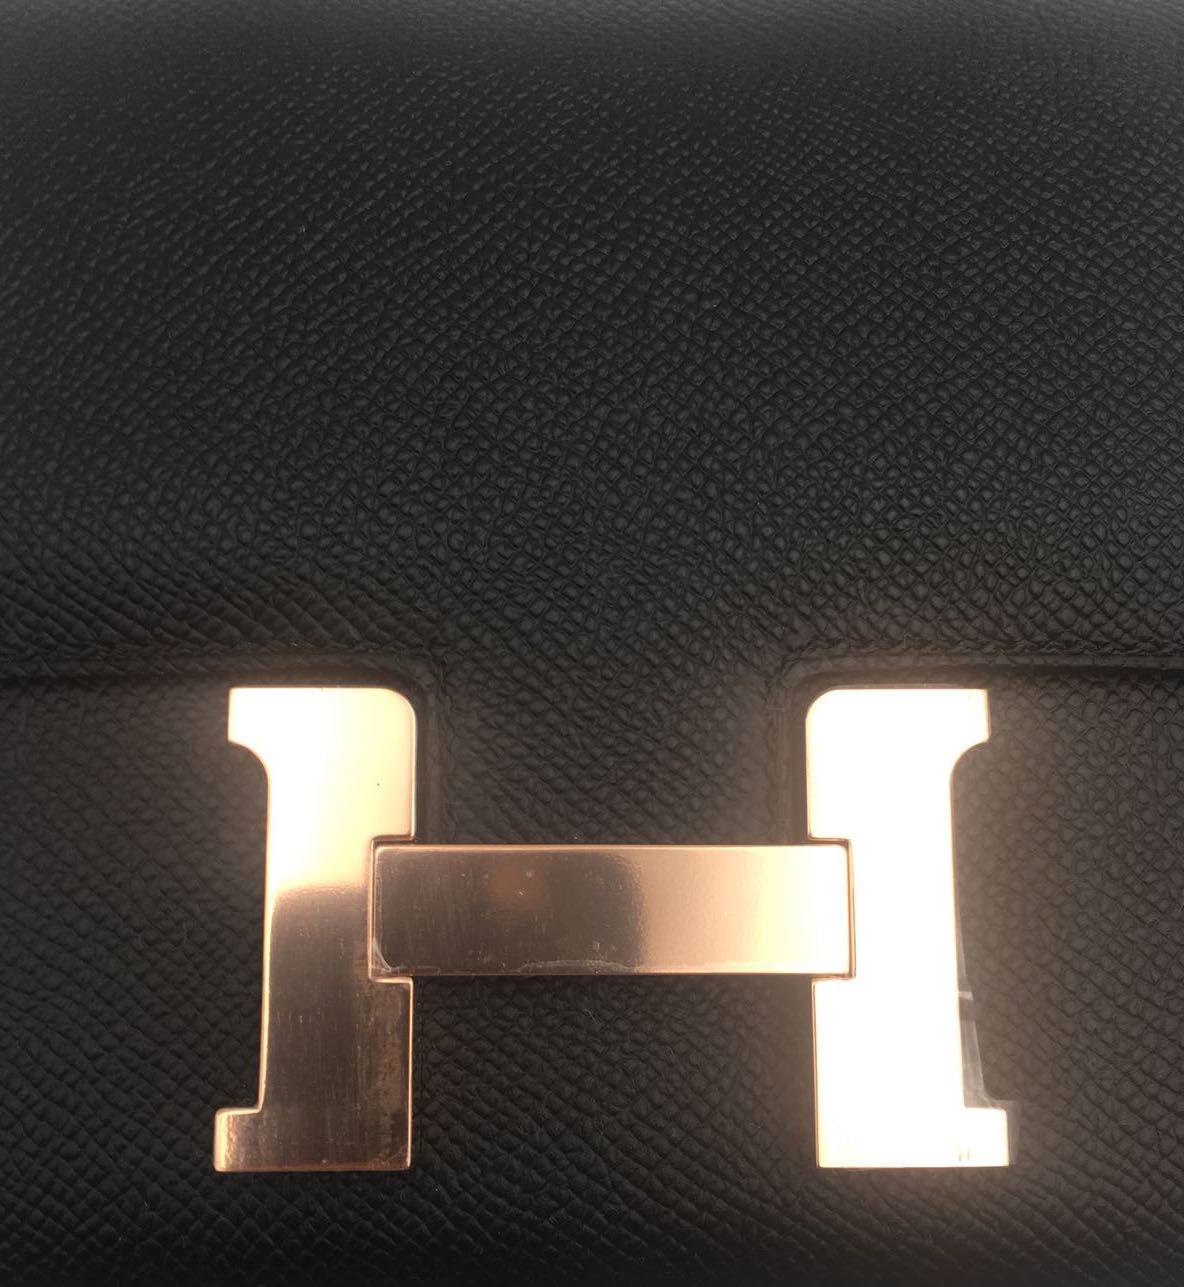 Hermes Vintage Dark Navy Constance 23cm Gold H Handbag